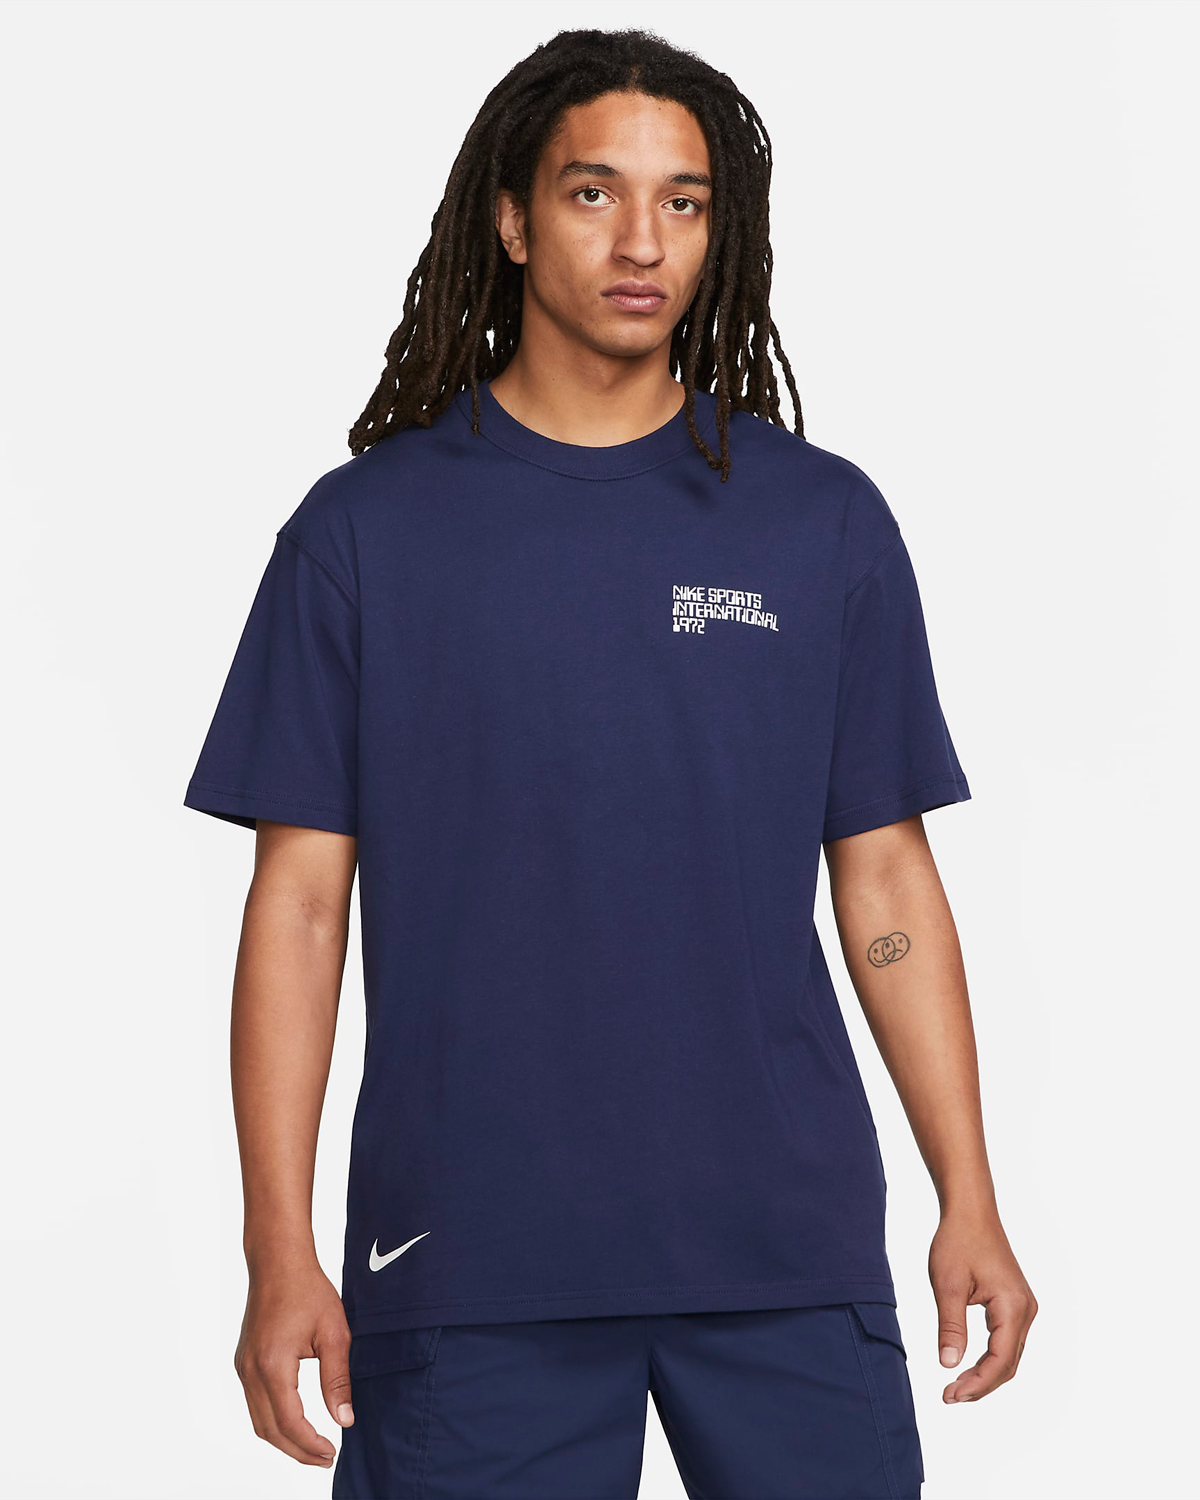 Nike-Sportswear-Circa-T-Shirt-Midnight-Navy-1